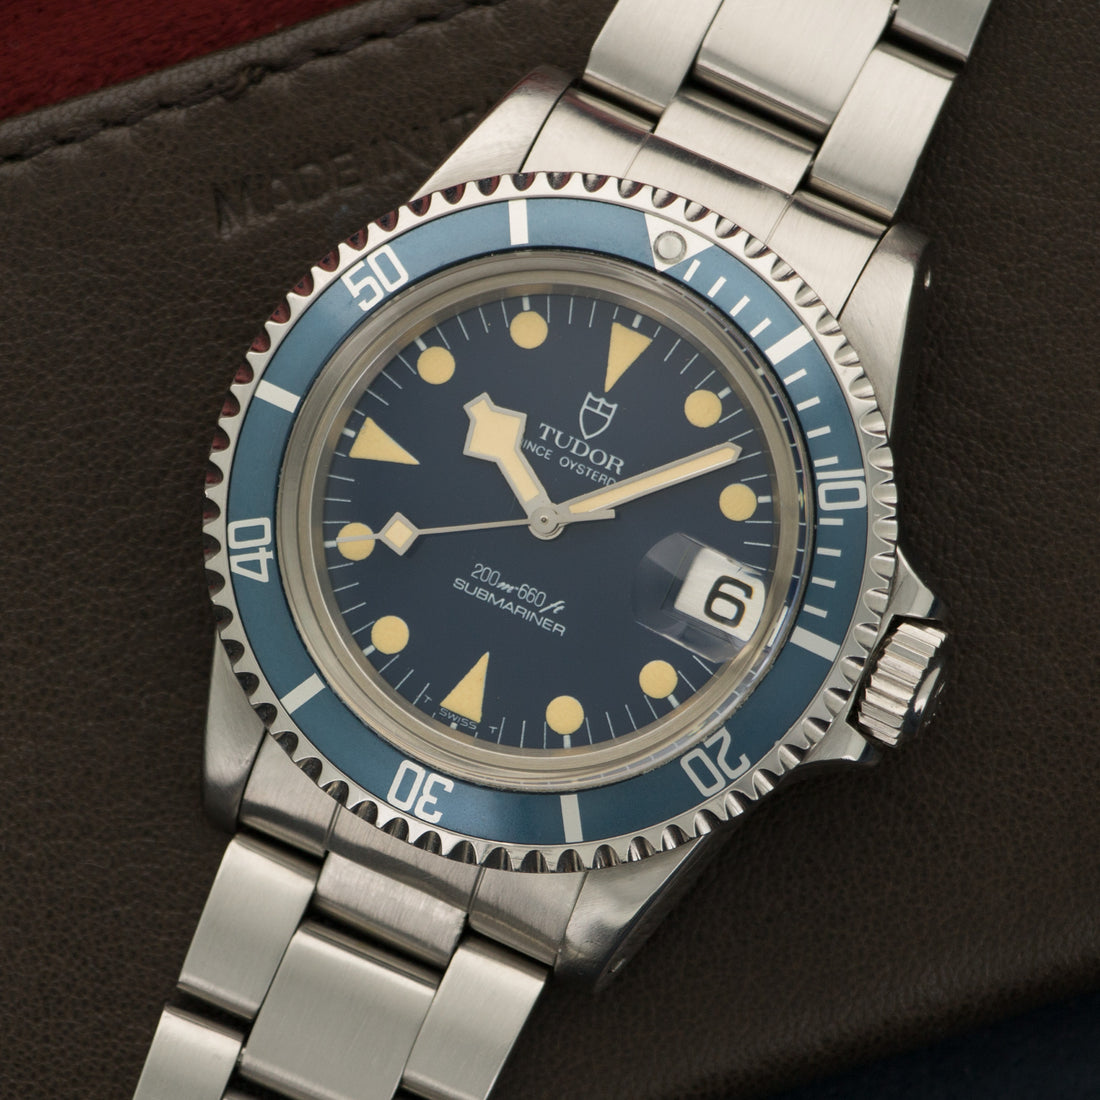 Tudor Submariner Snowflake Watch Ref. 76100